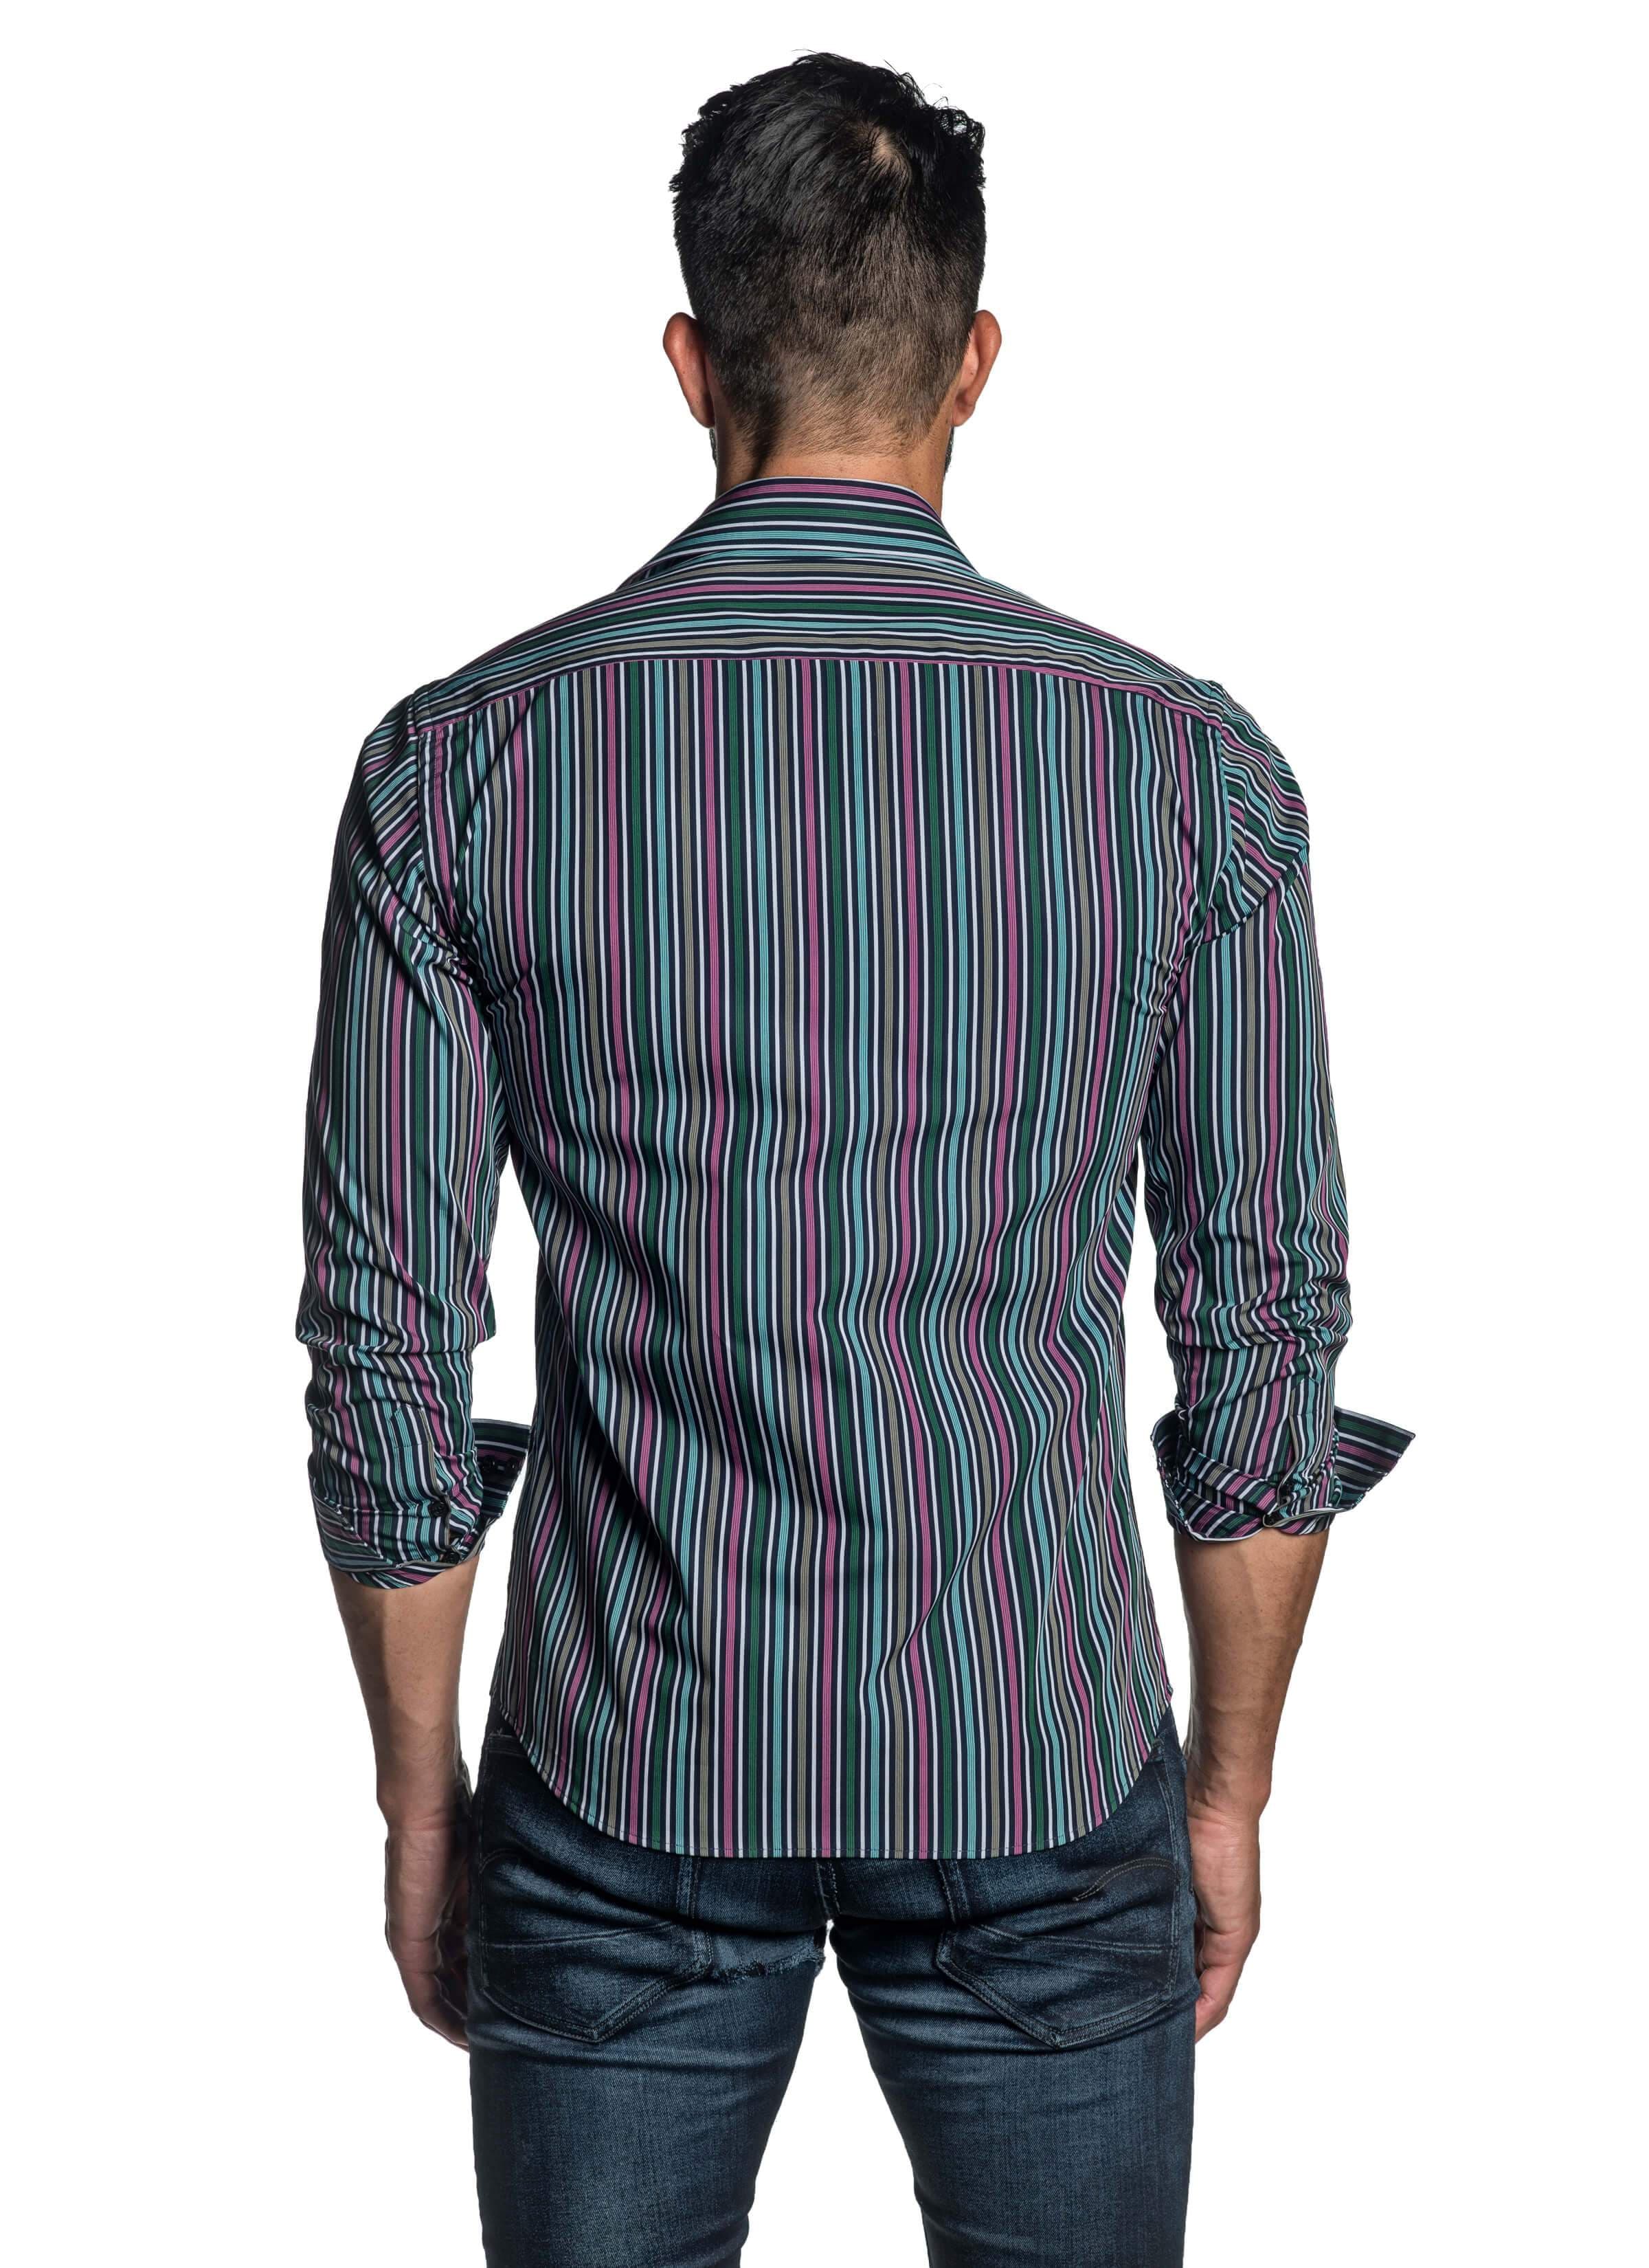 Multicolor Stripe Shirt for Men T-2647